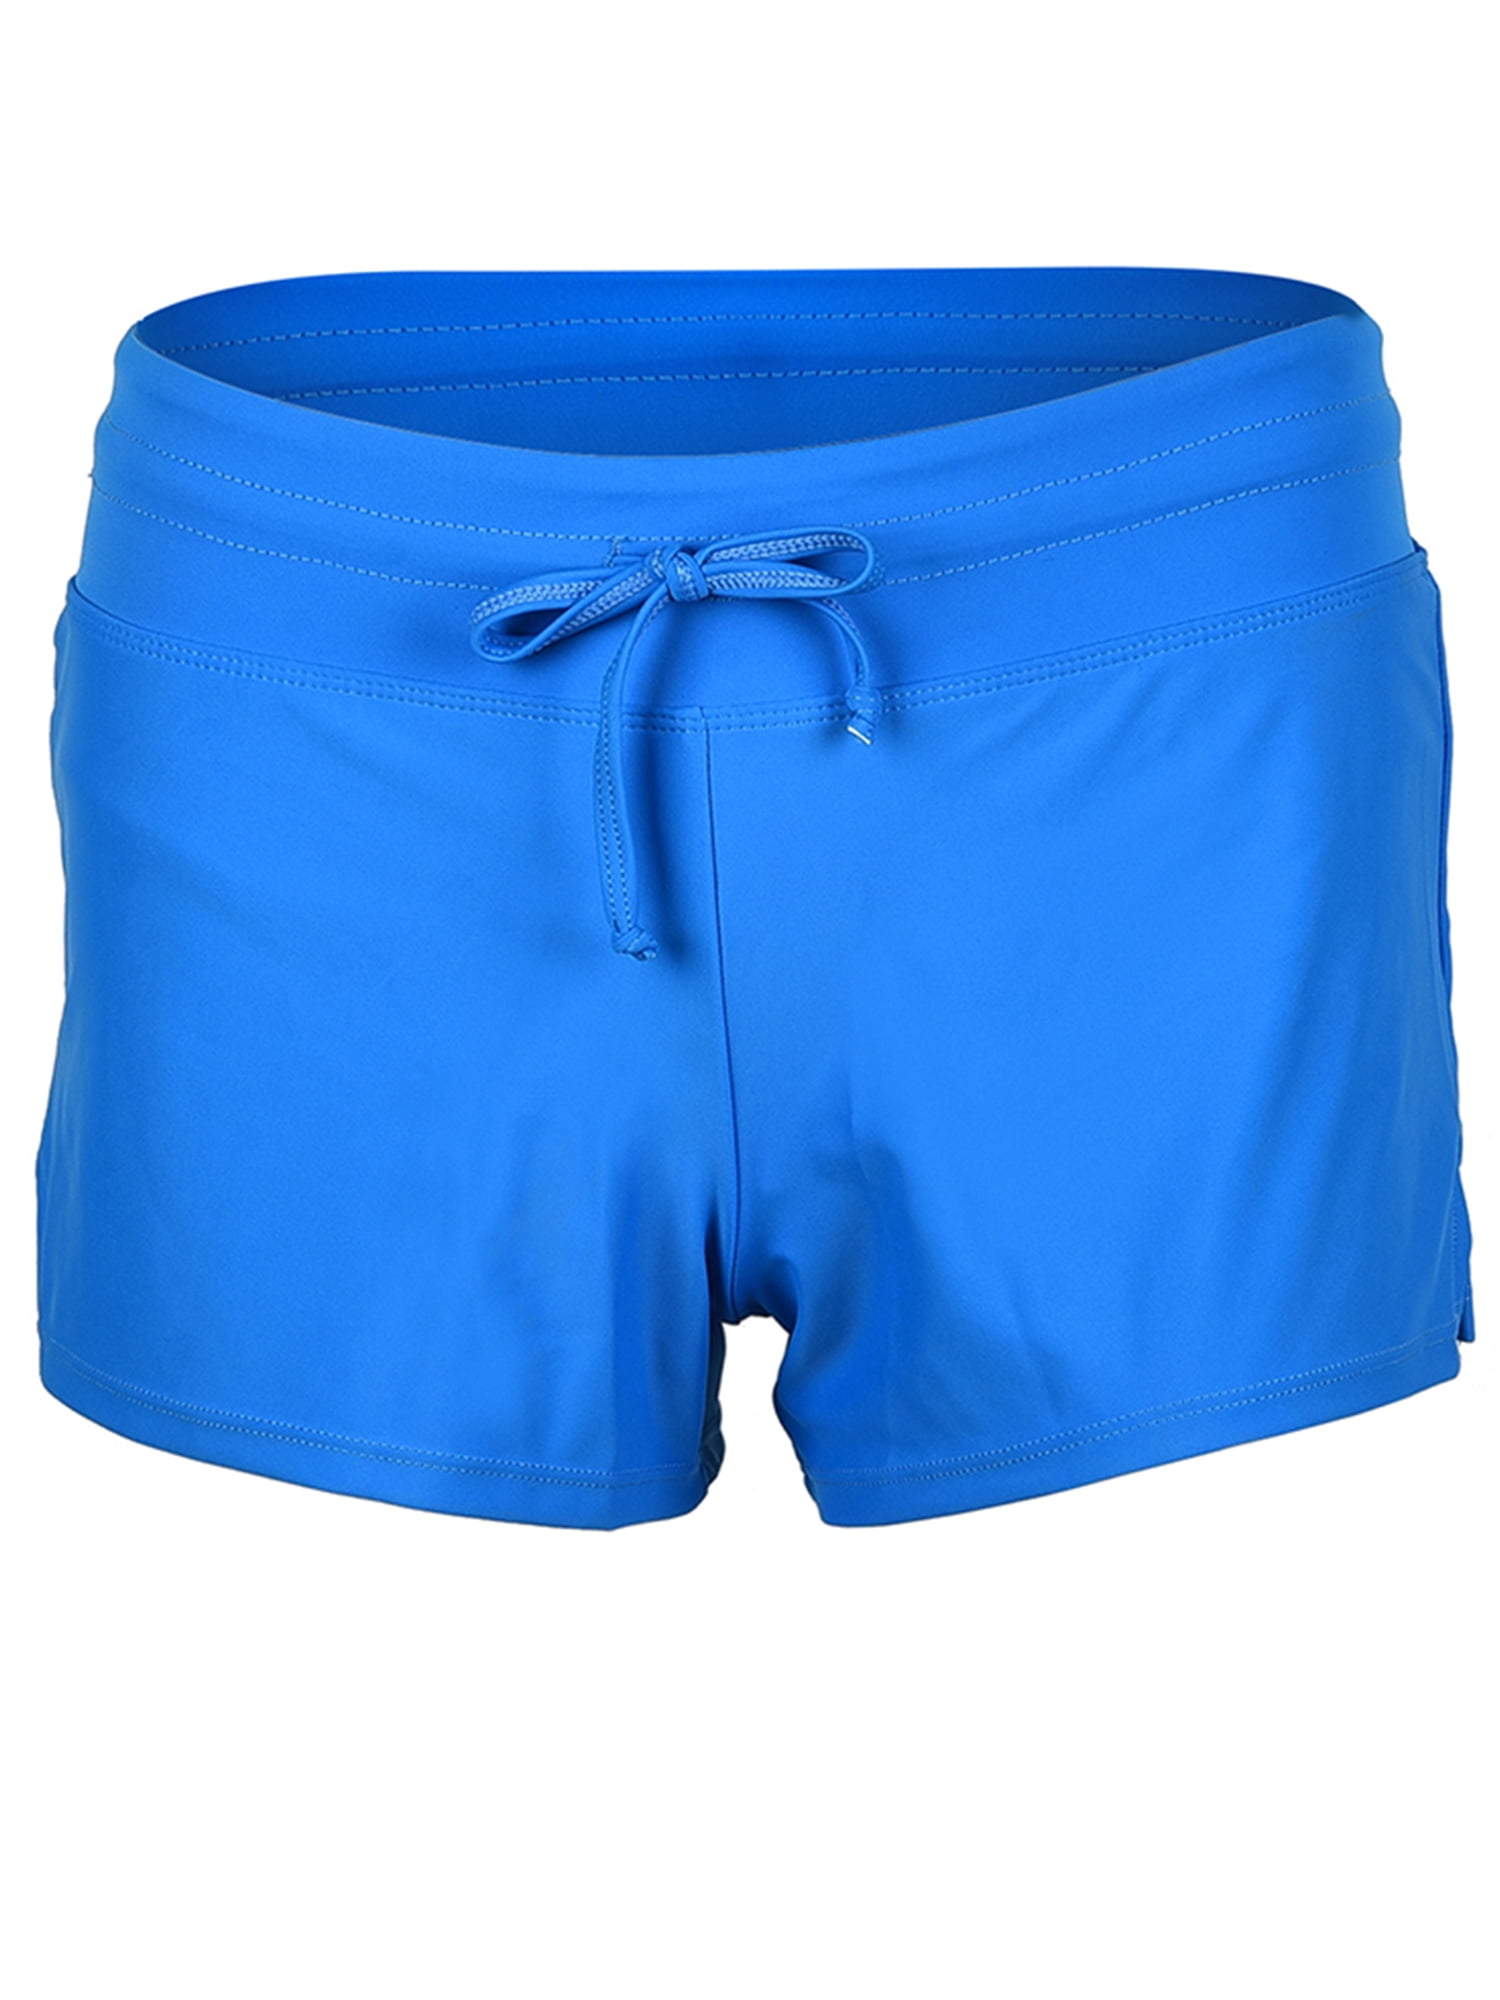 Dicomi Women Bikini Swim Pants Shorts Bottom Swimsuit Solid Color Swimwear Bathing Briefs 